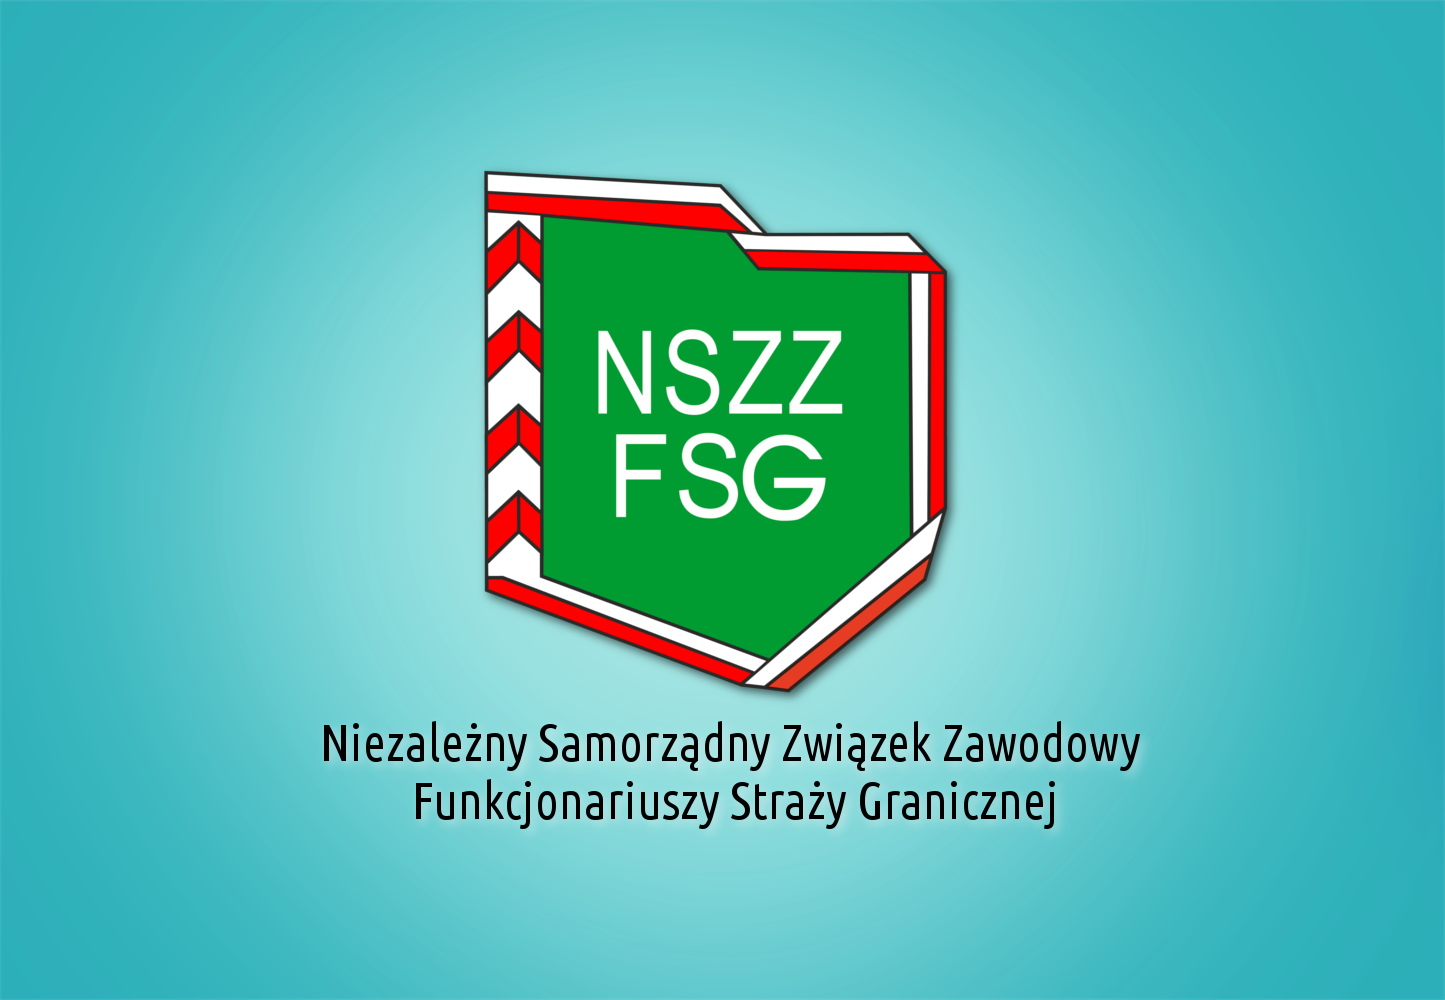 nszzfsg.pl